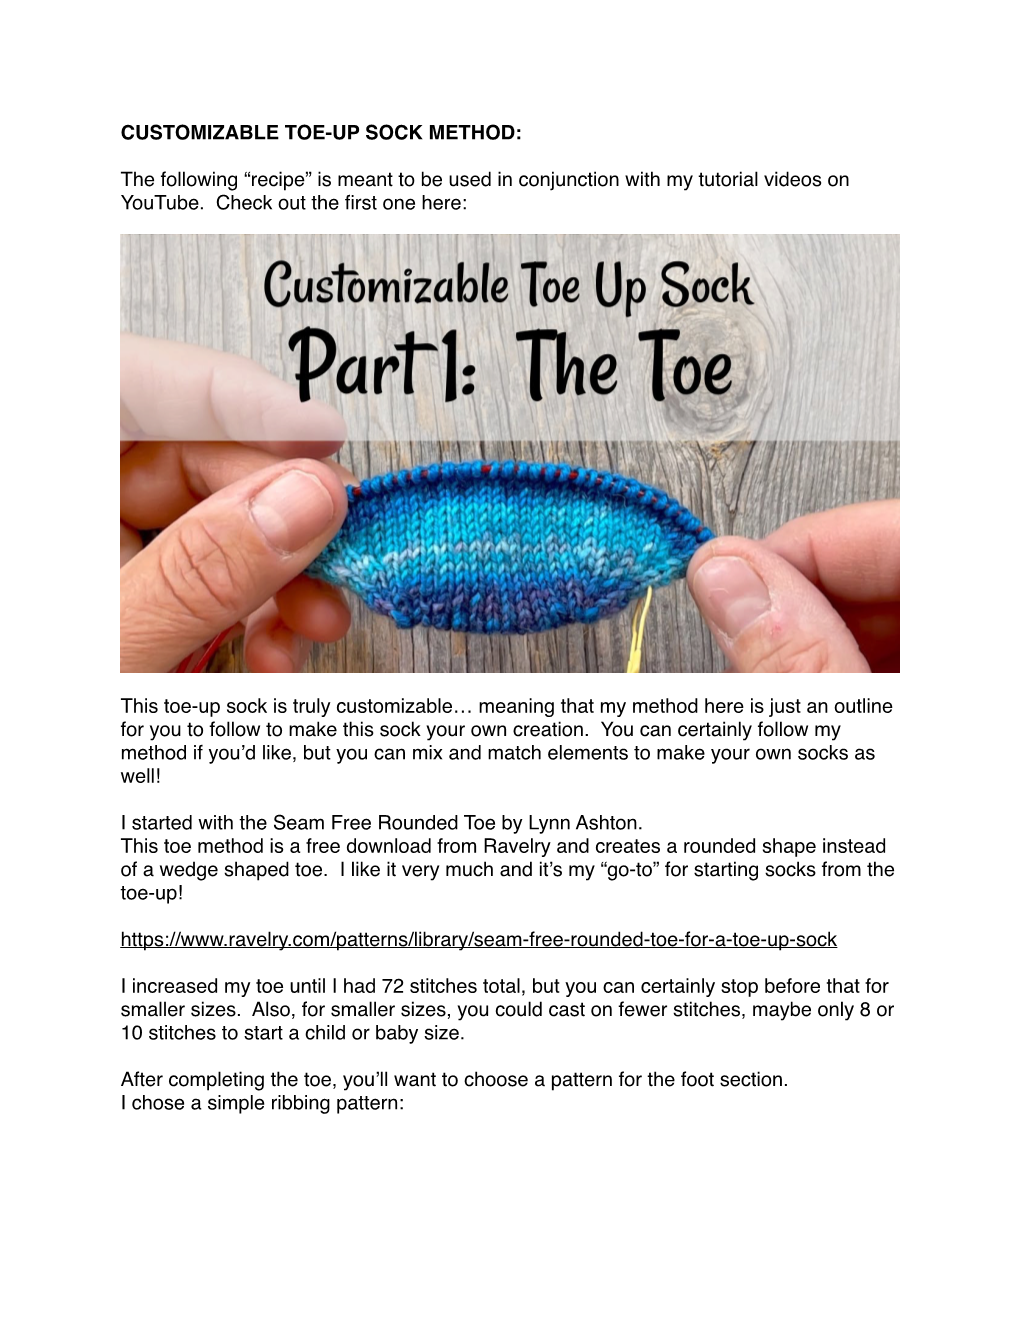 Customizable Toe-Up Sock Method